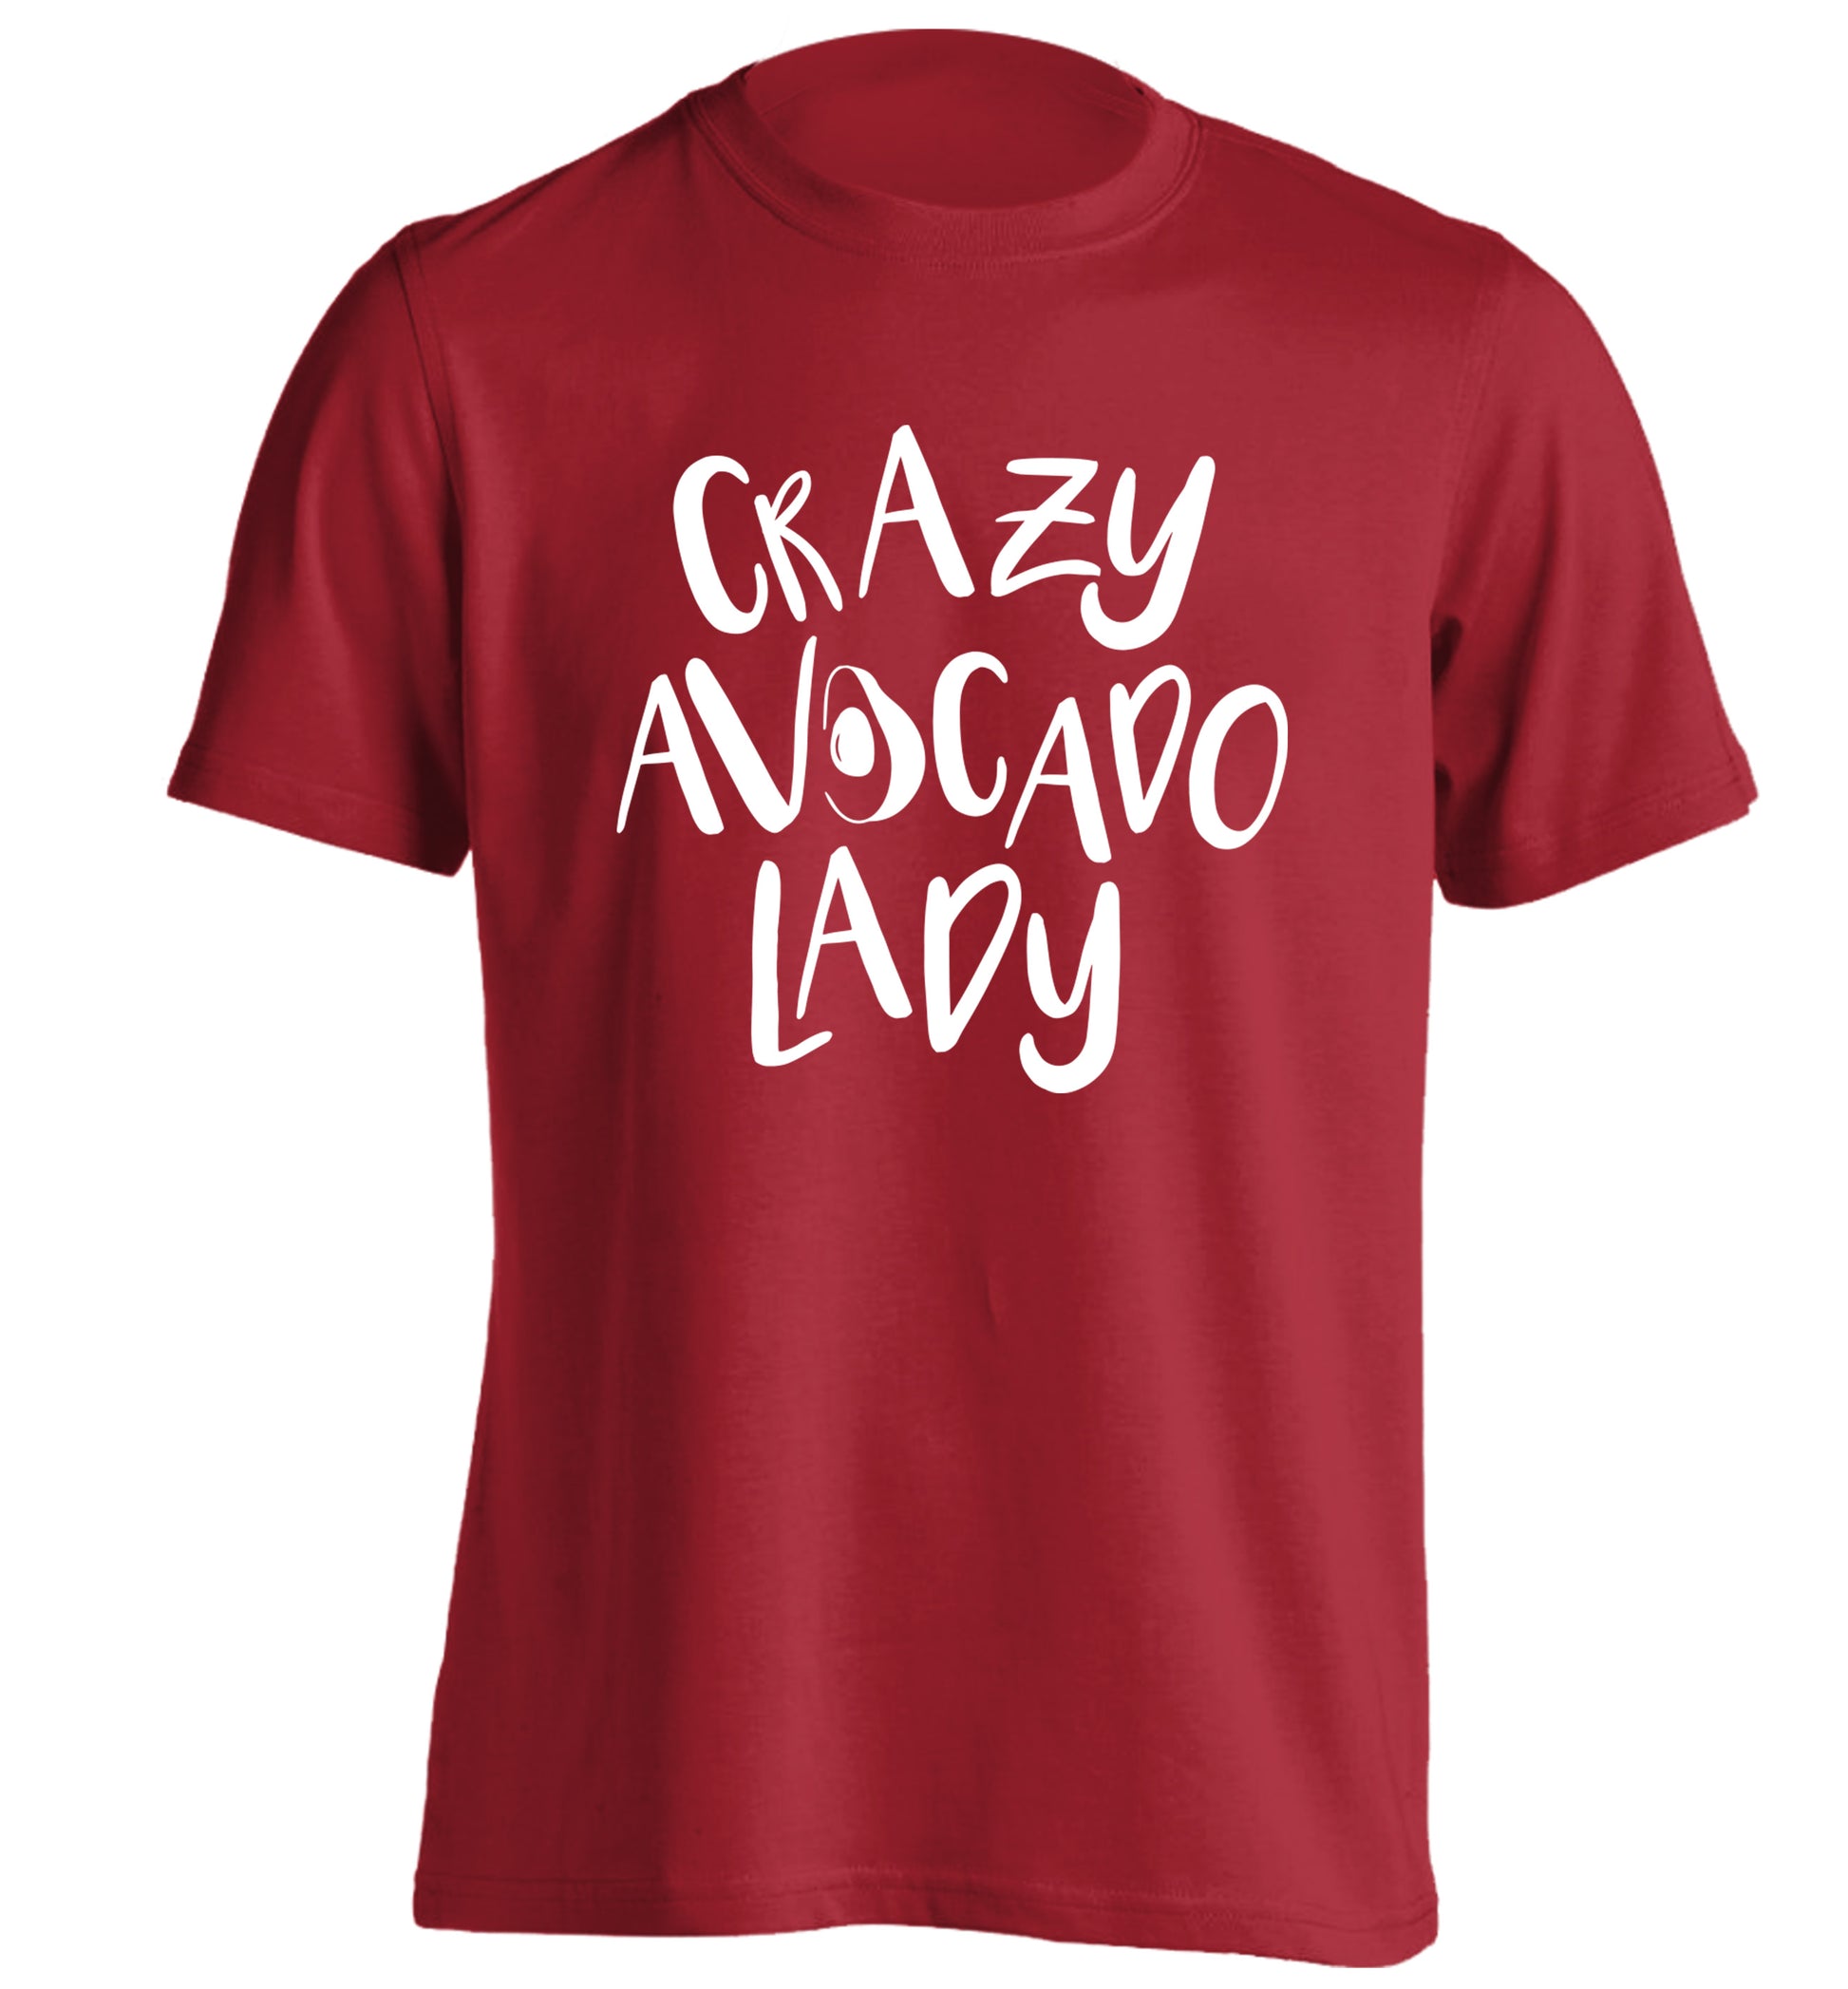 Crazy avocado lady adults unisex red Tshirt 2XL